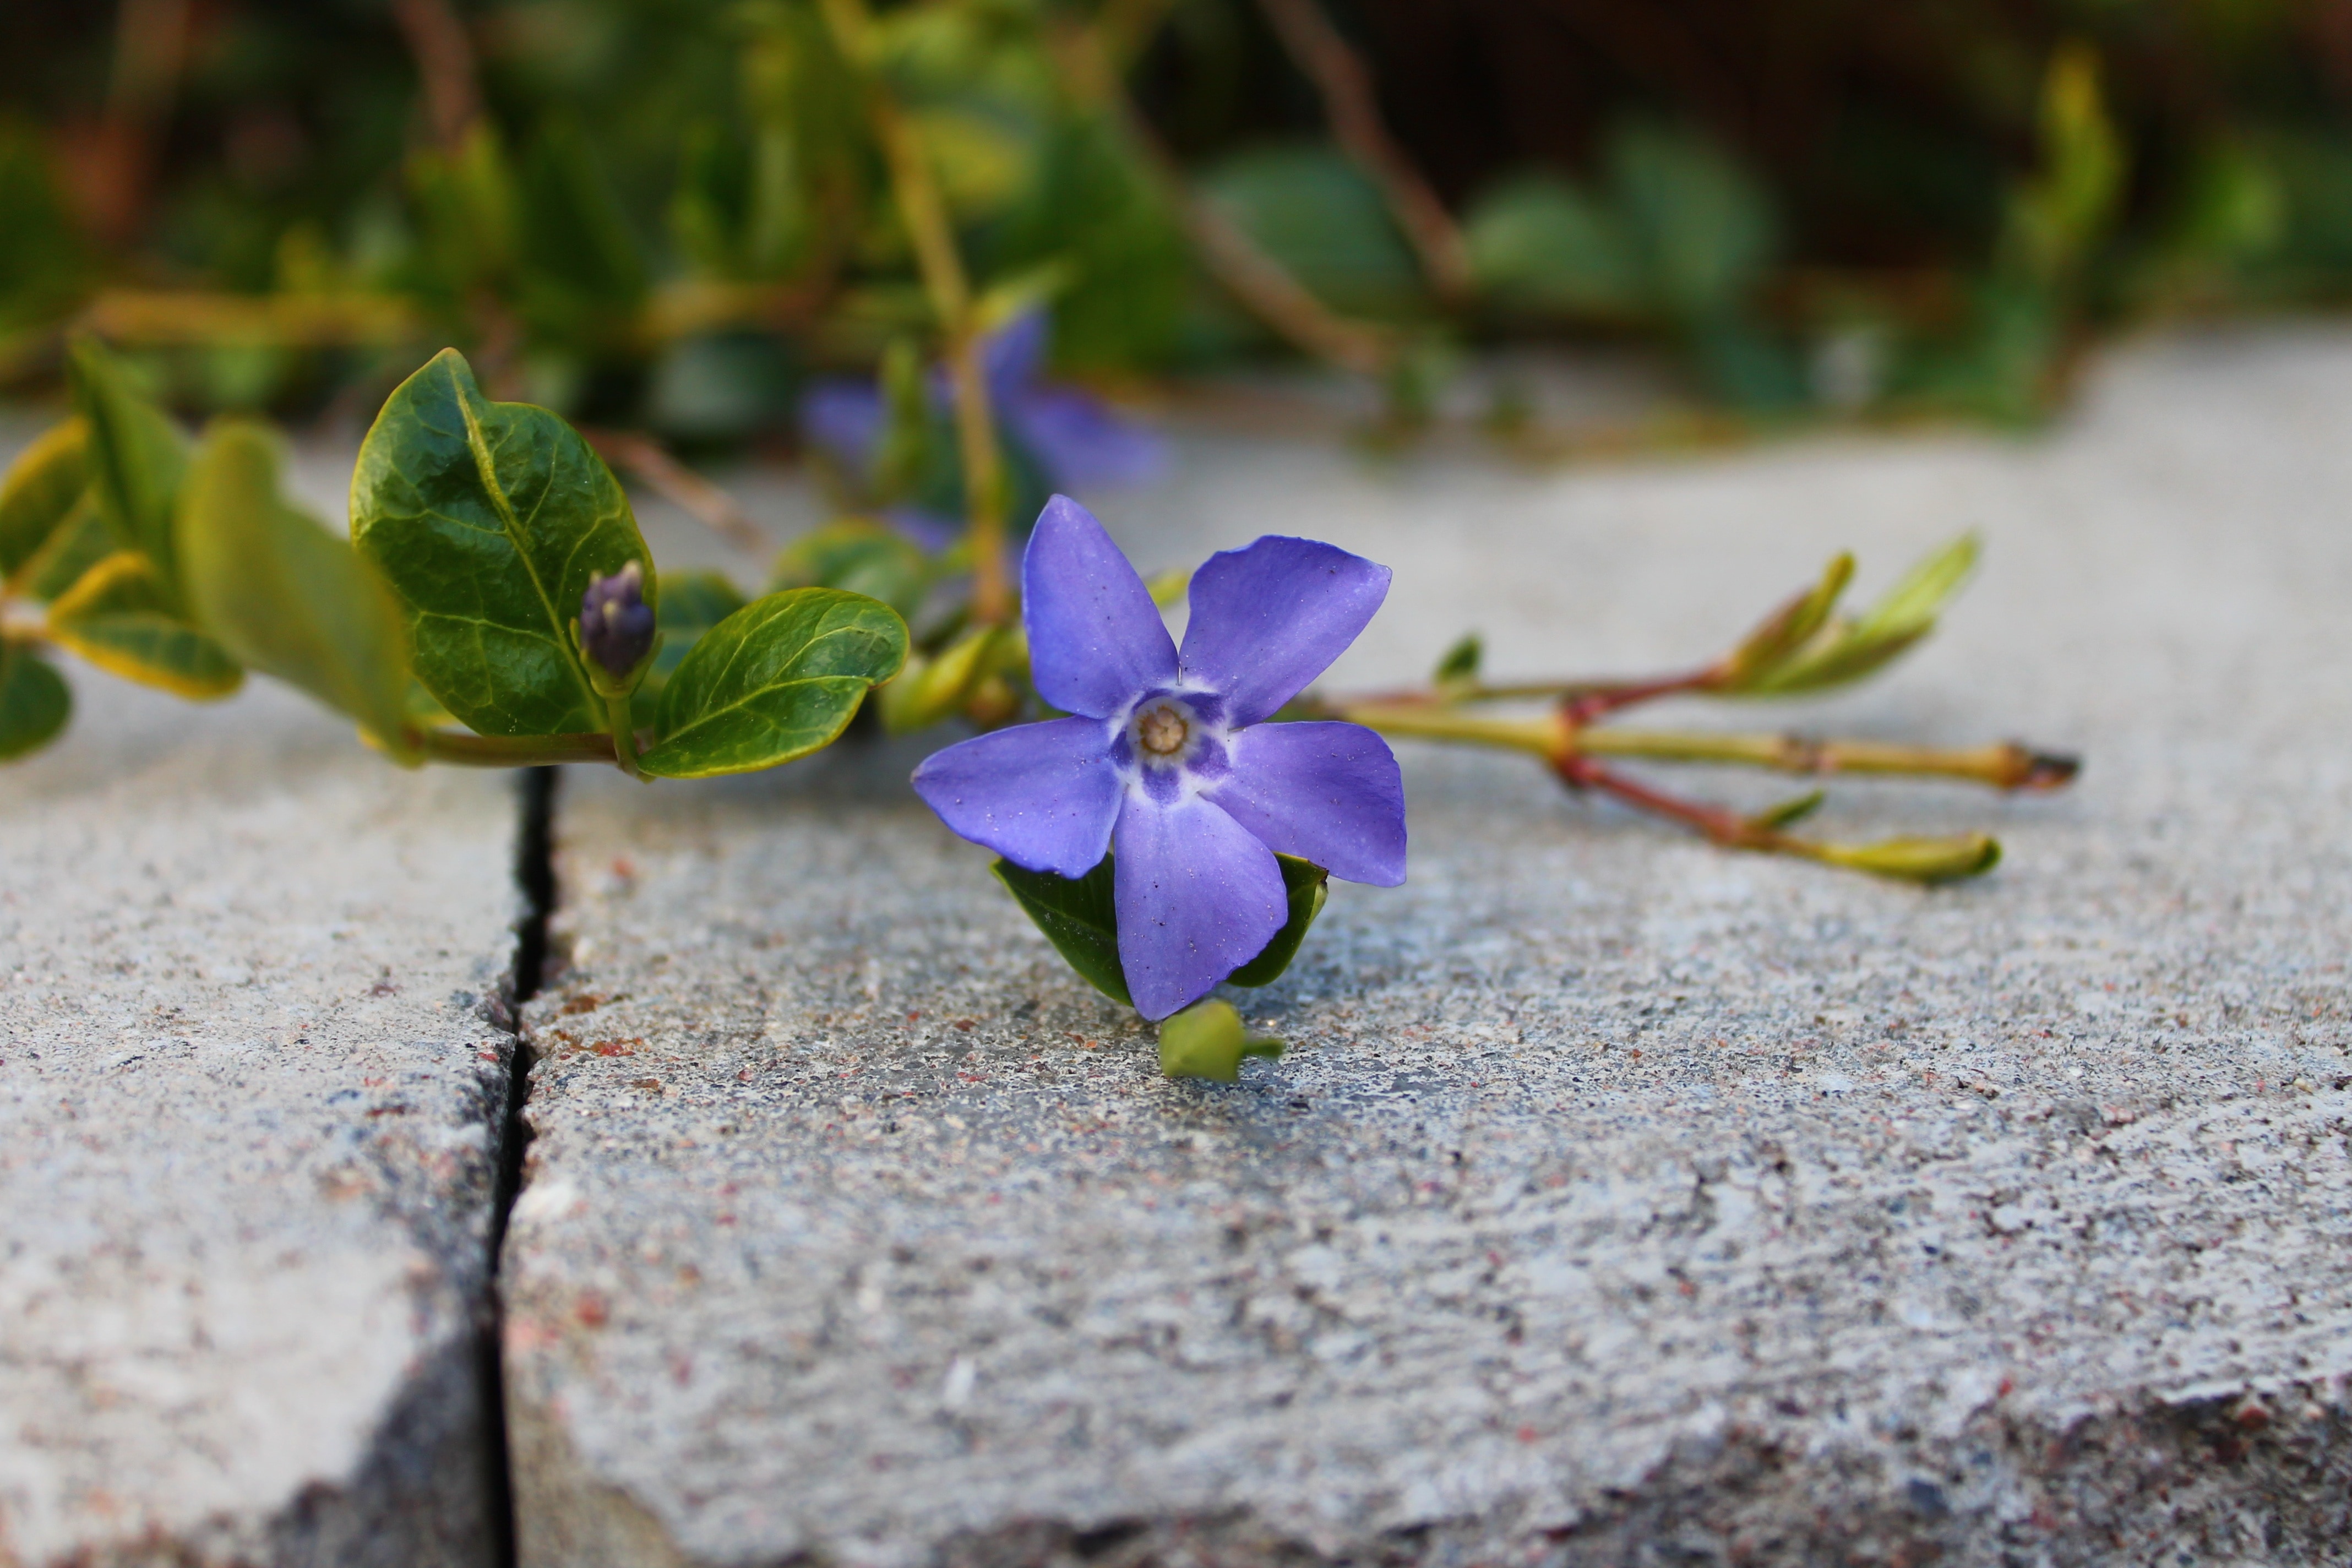 purple flower plant